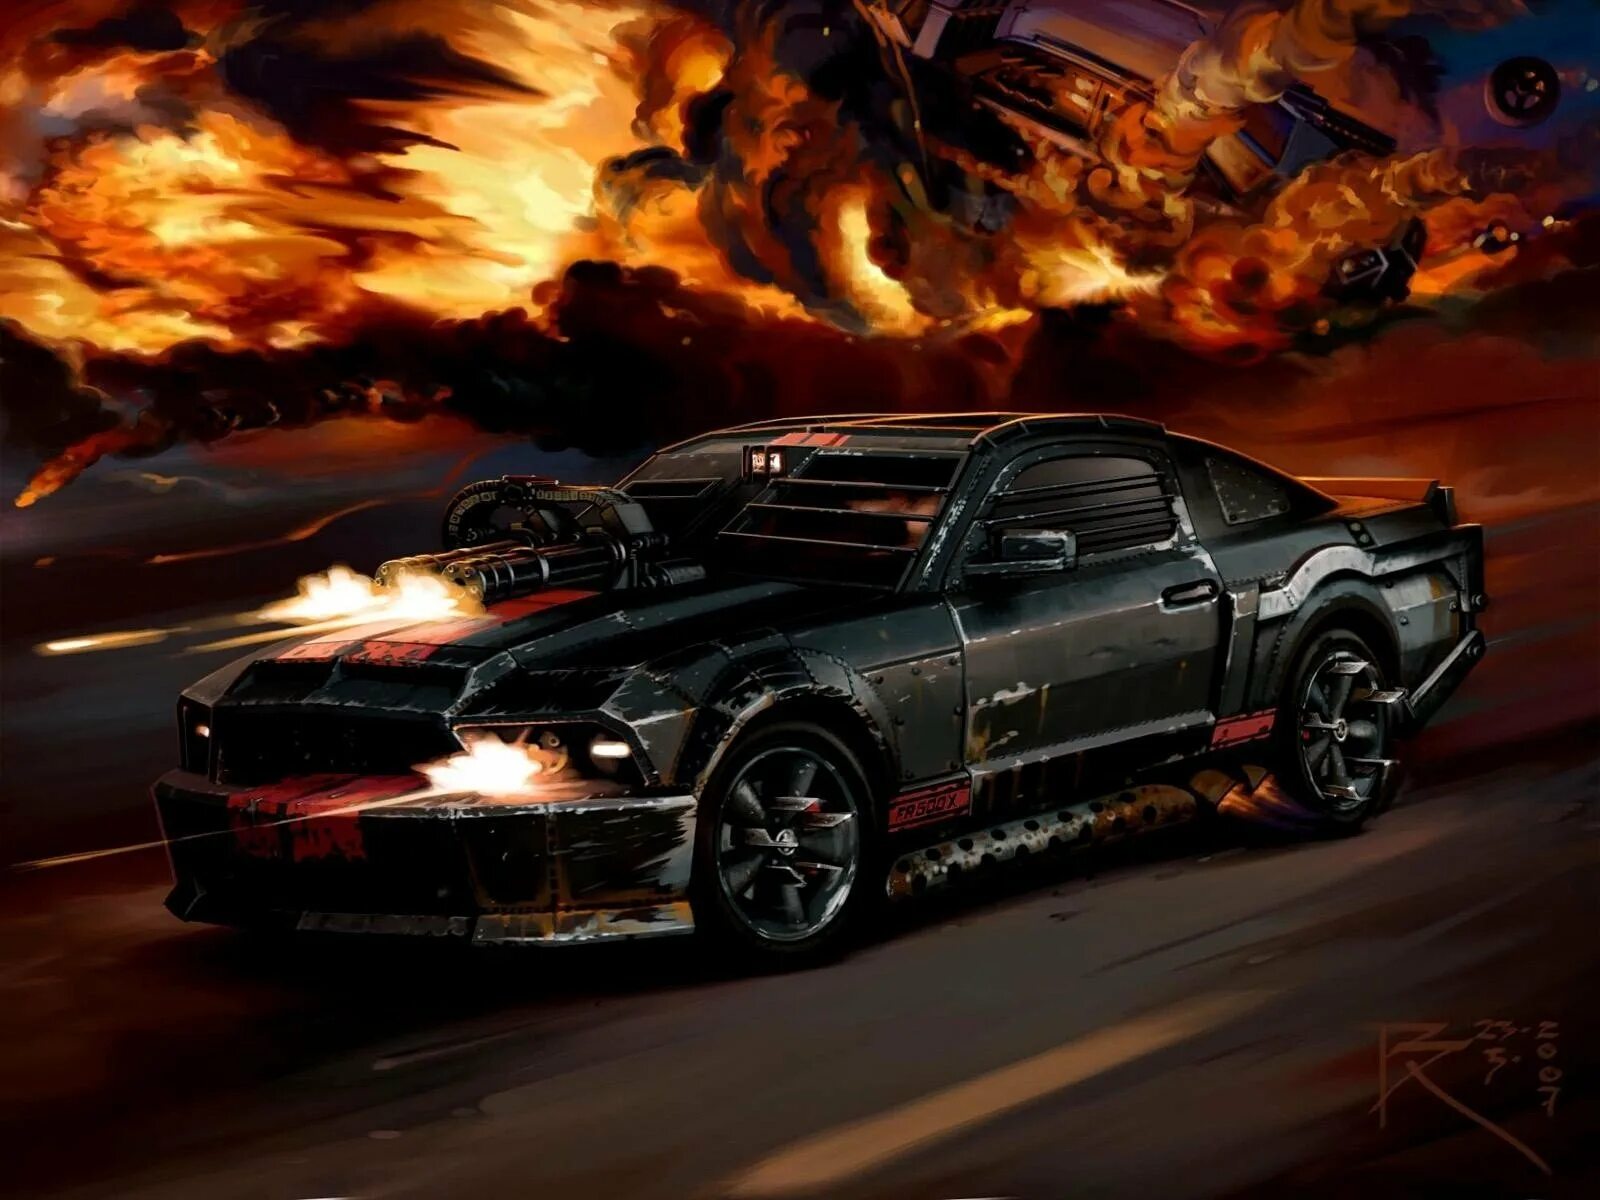 Ford Mustang 2006 gt Death Race. Mustang Shelby gt500 апокалипсис. Форд Мустанг ГТ гоночный. Мощь машины